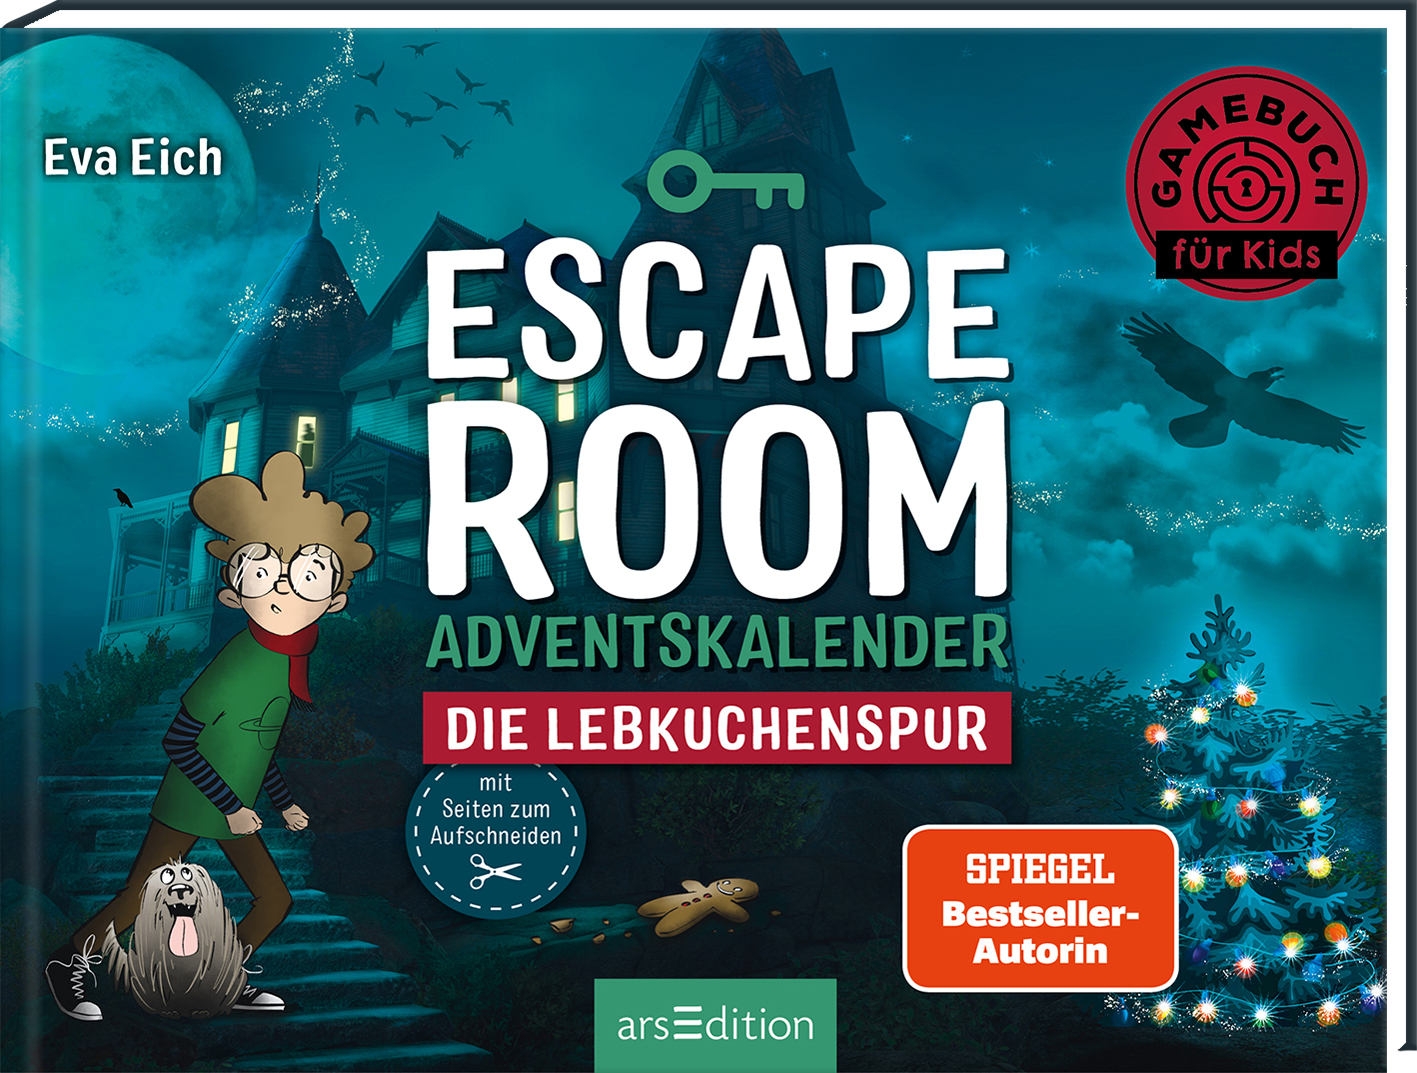 ARS EDITION Adventskalender Escape Room 134918 Die Lebkuchenspur